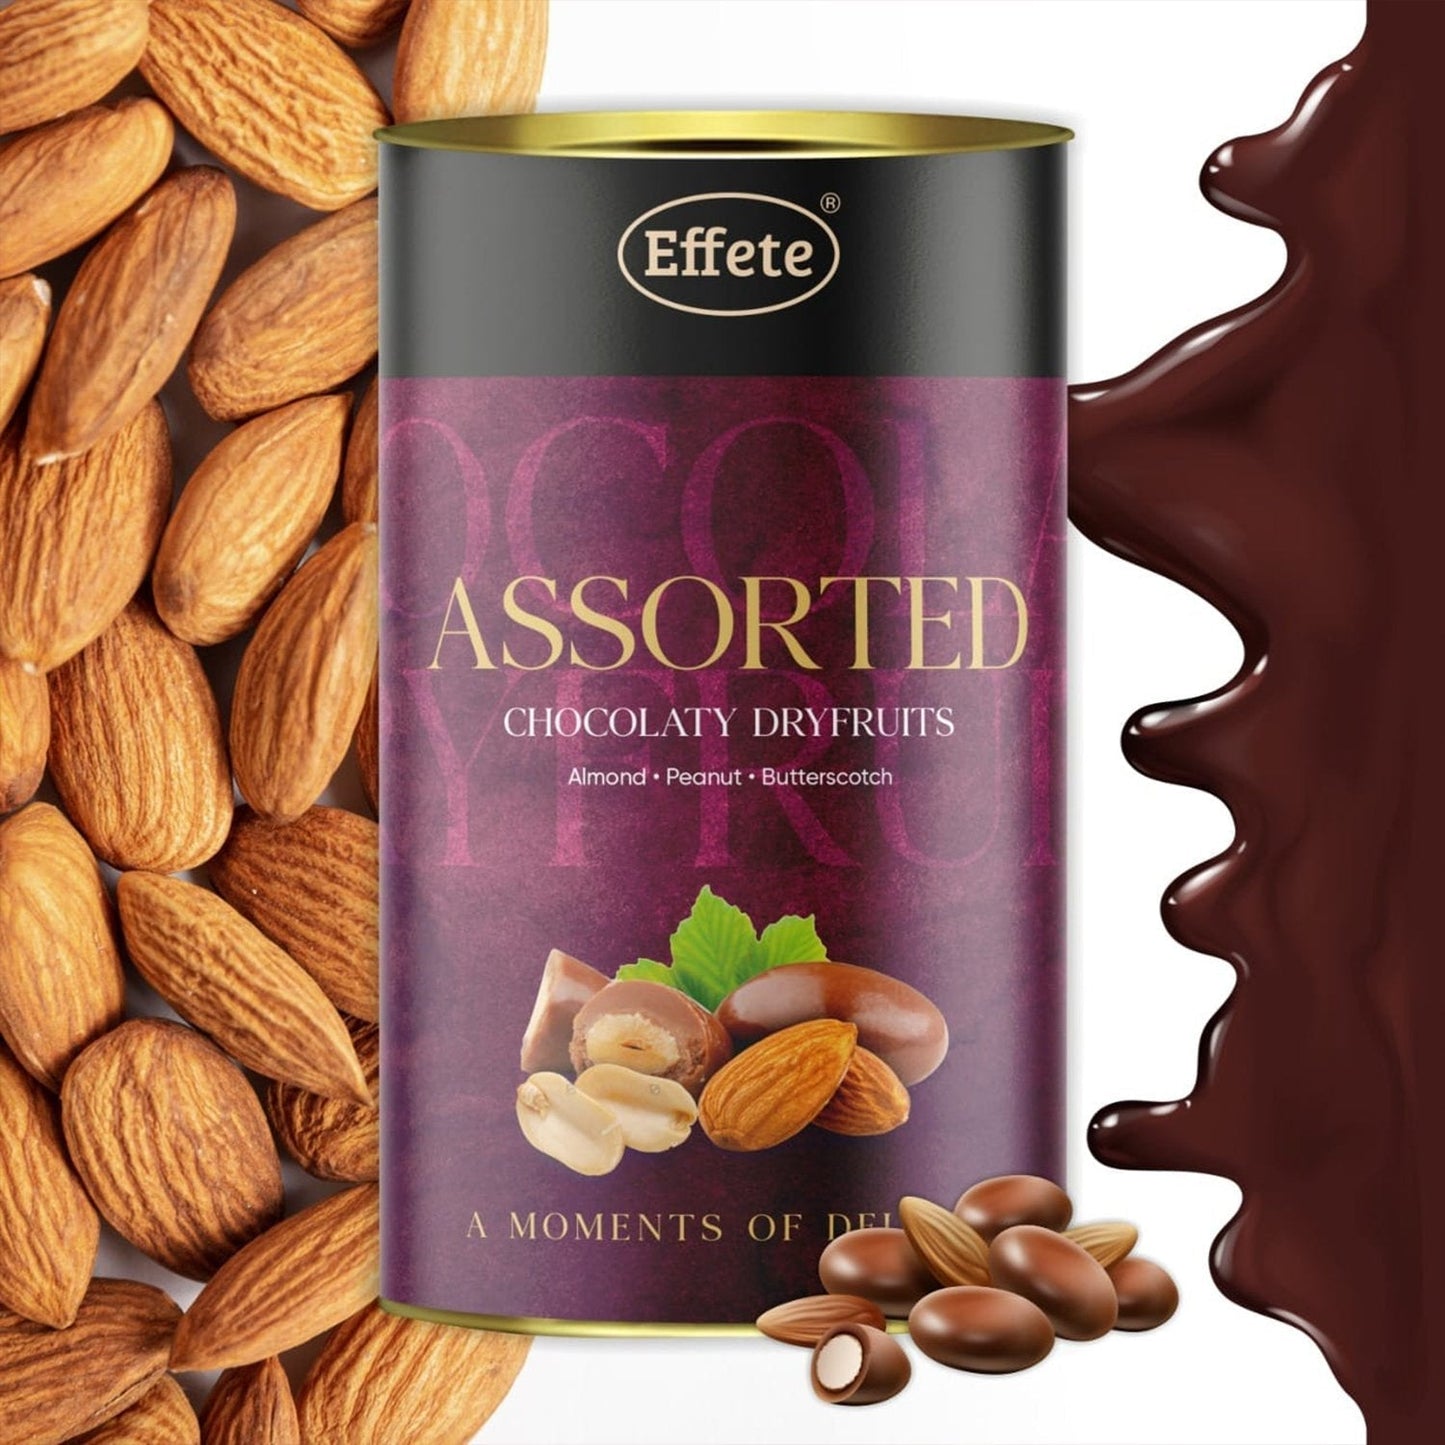 Effete Assorted Chocolate Dryfruits - Almonds, Peanut & Butterscotch (96 gm)